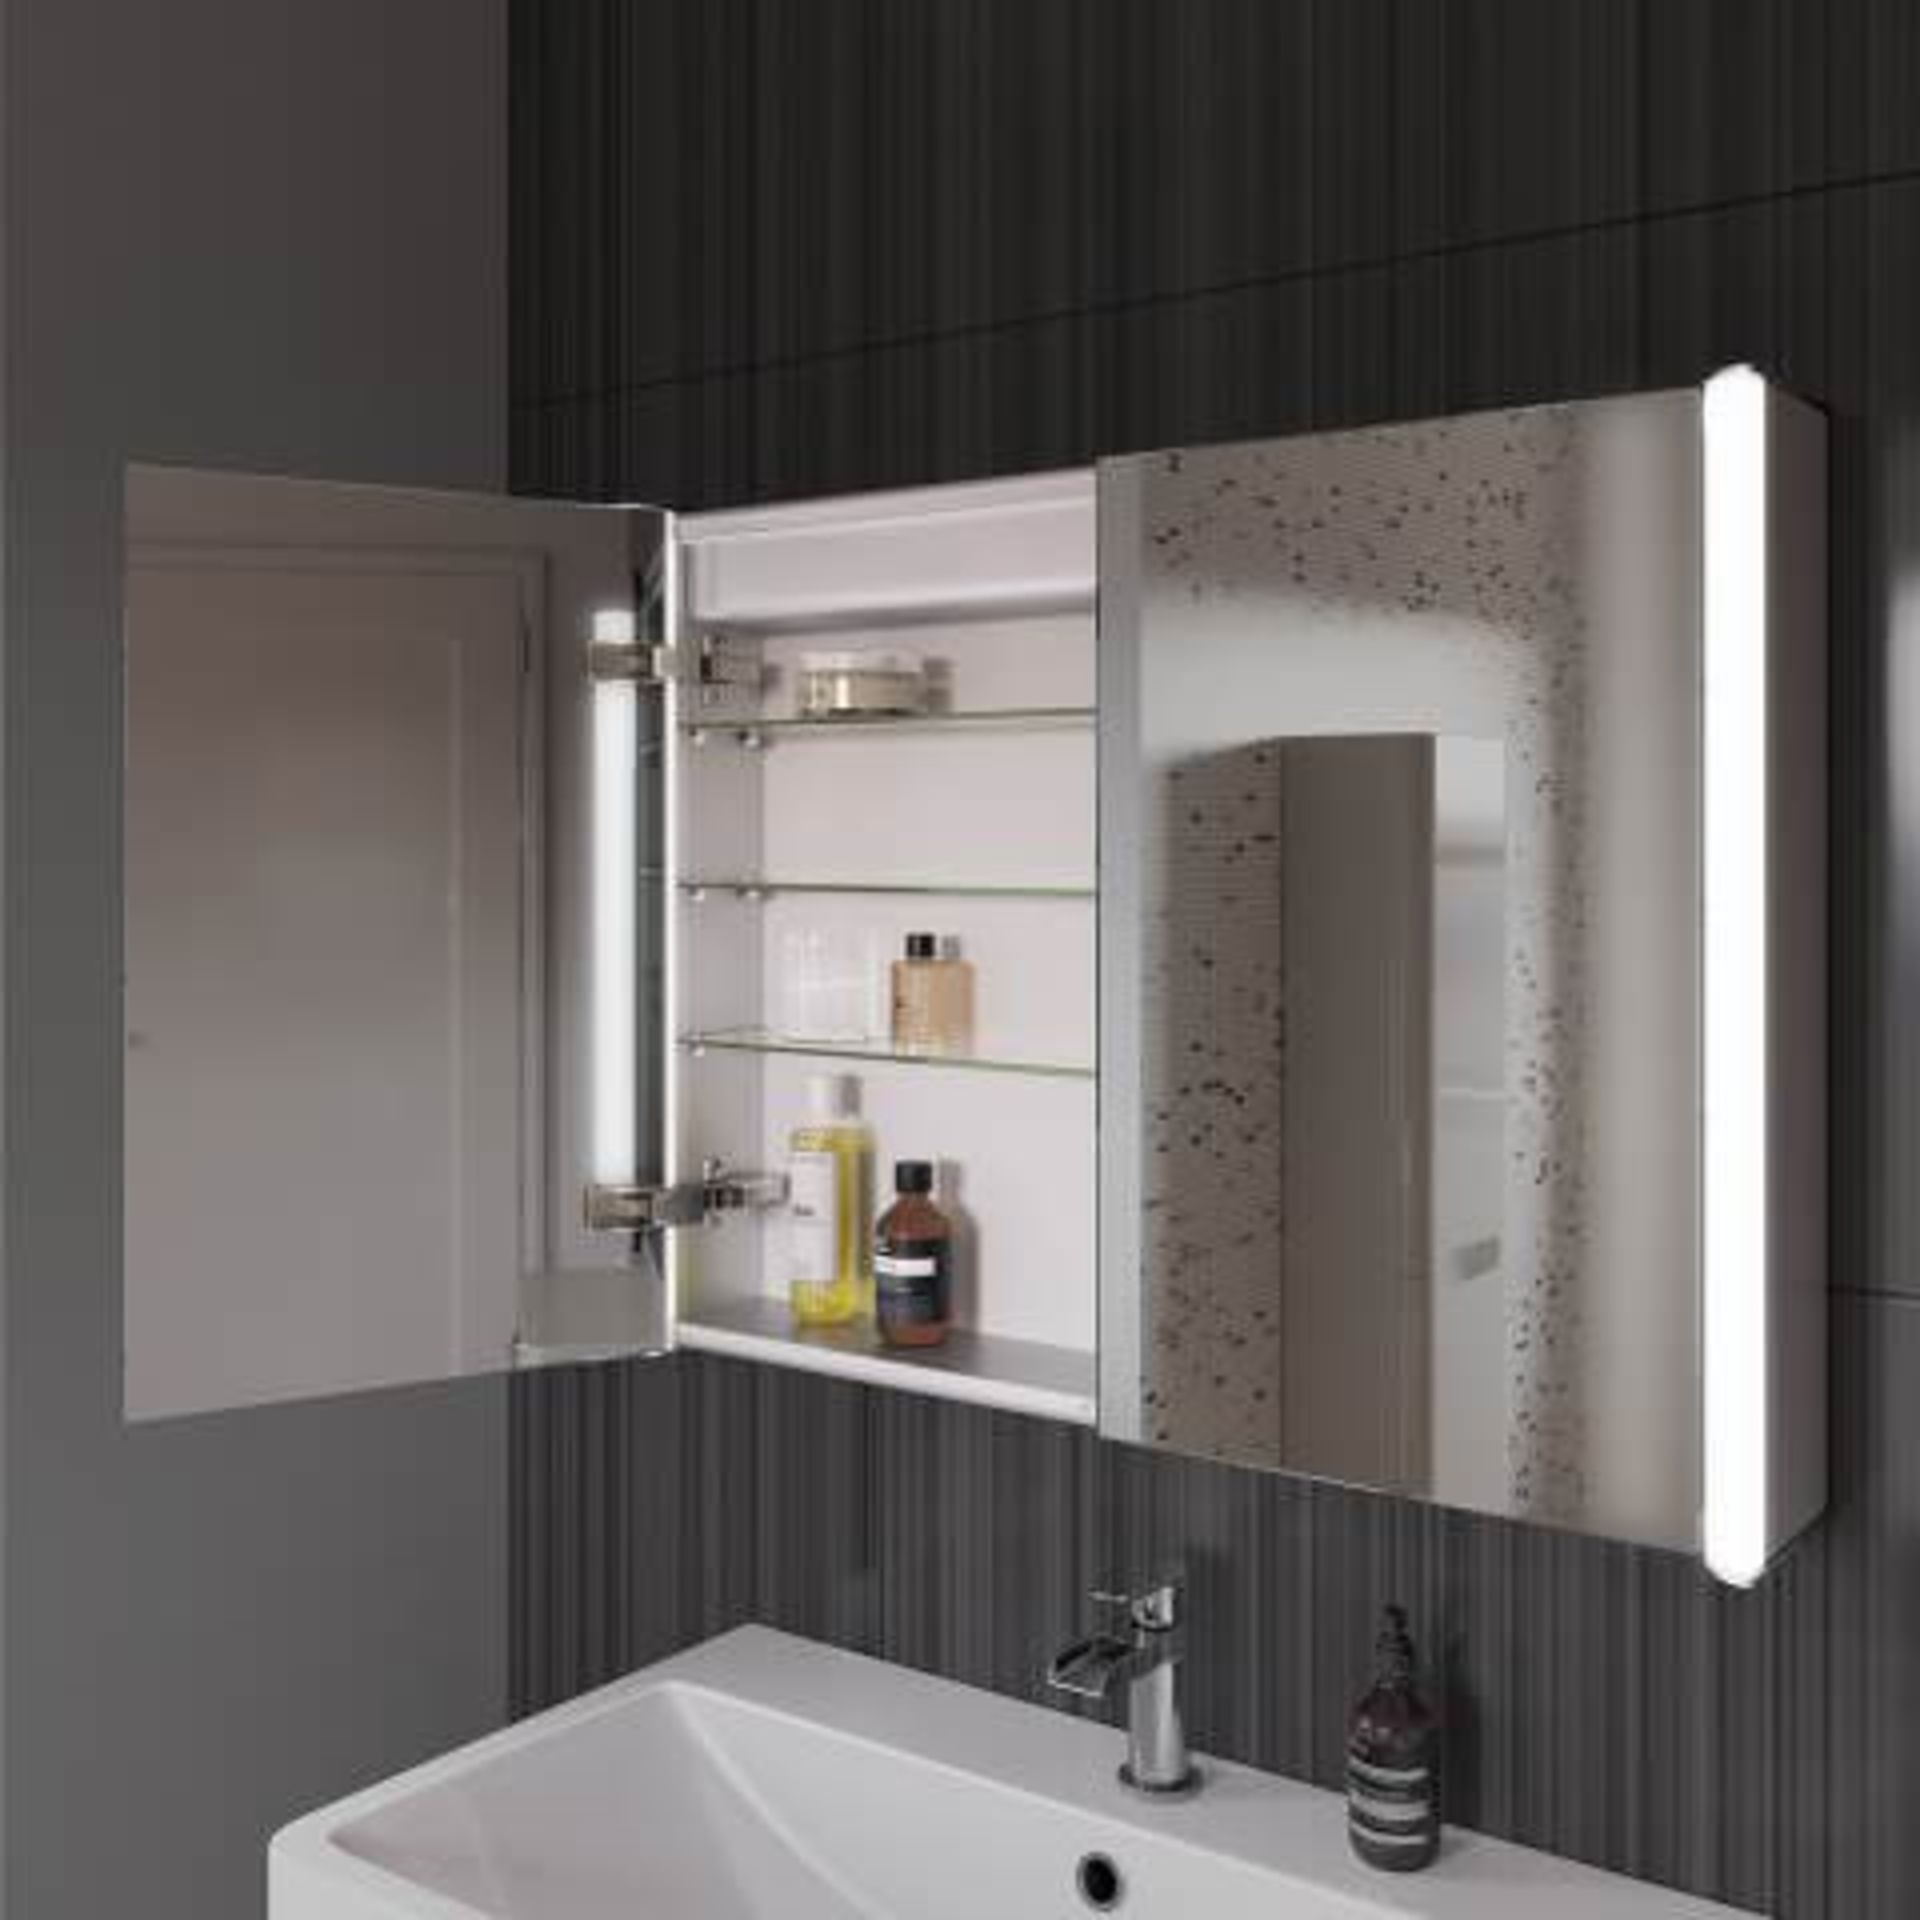 (Z37) 800x600mm Bloom Illuminated LED Mirror Cabinet & Shaver Socket. RRP £599.99. - Image 3 of 5